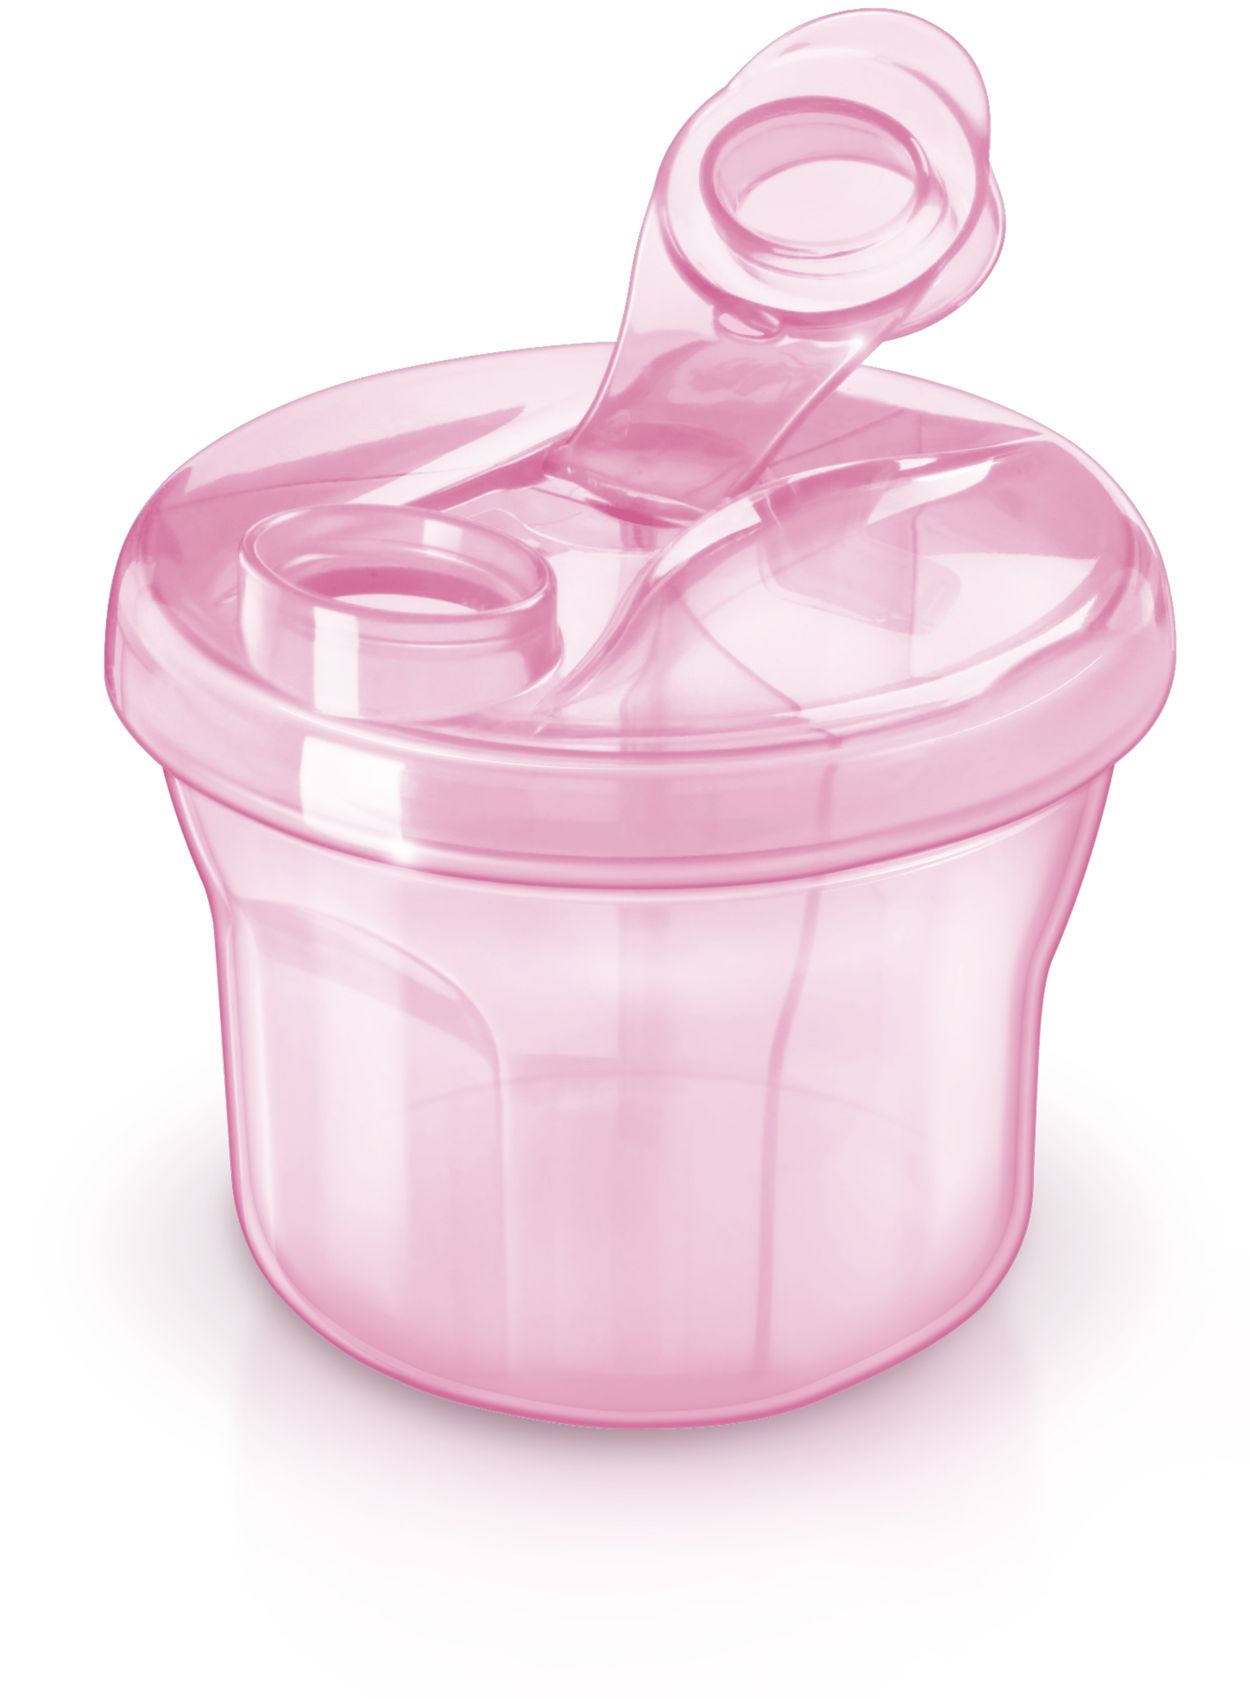 3 Doses Formula Container of Baby Avent Milk Powder Dispenser